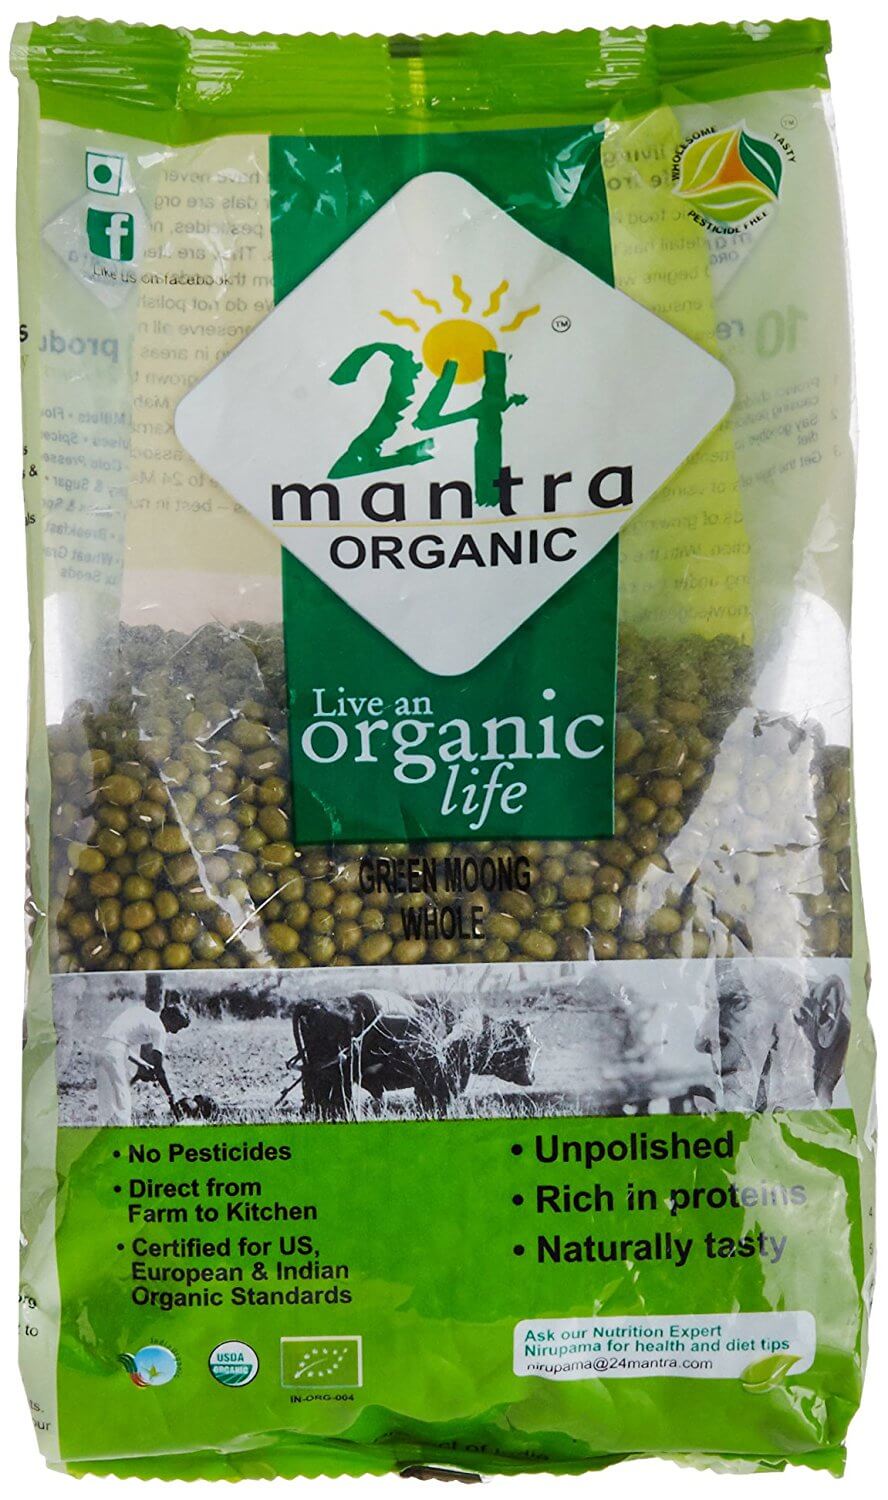 24 Mantra Organic Green Moong Whole 500g VizagShop.com